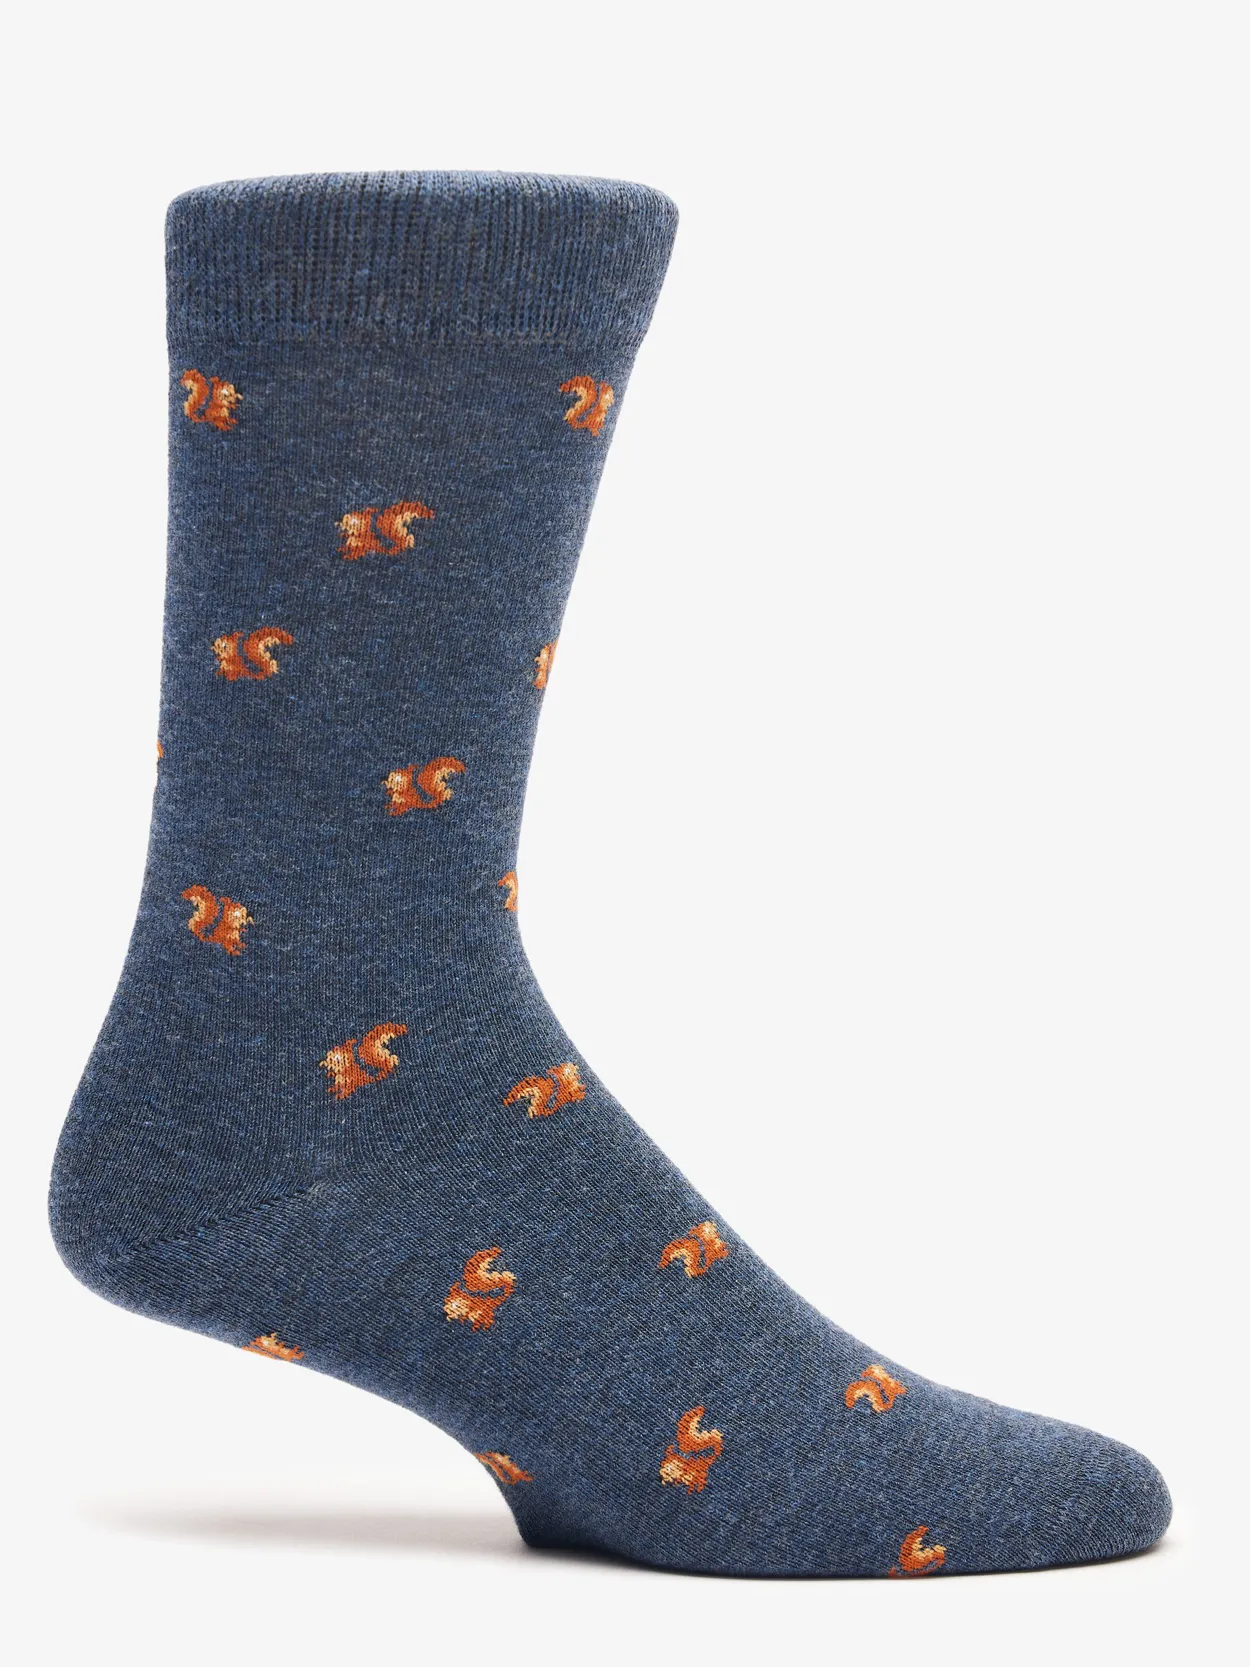 Navy & Orange Socks Motif Squirrel